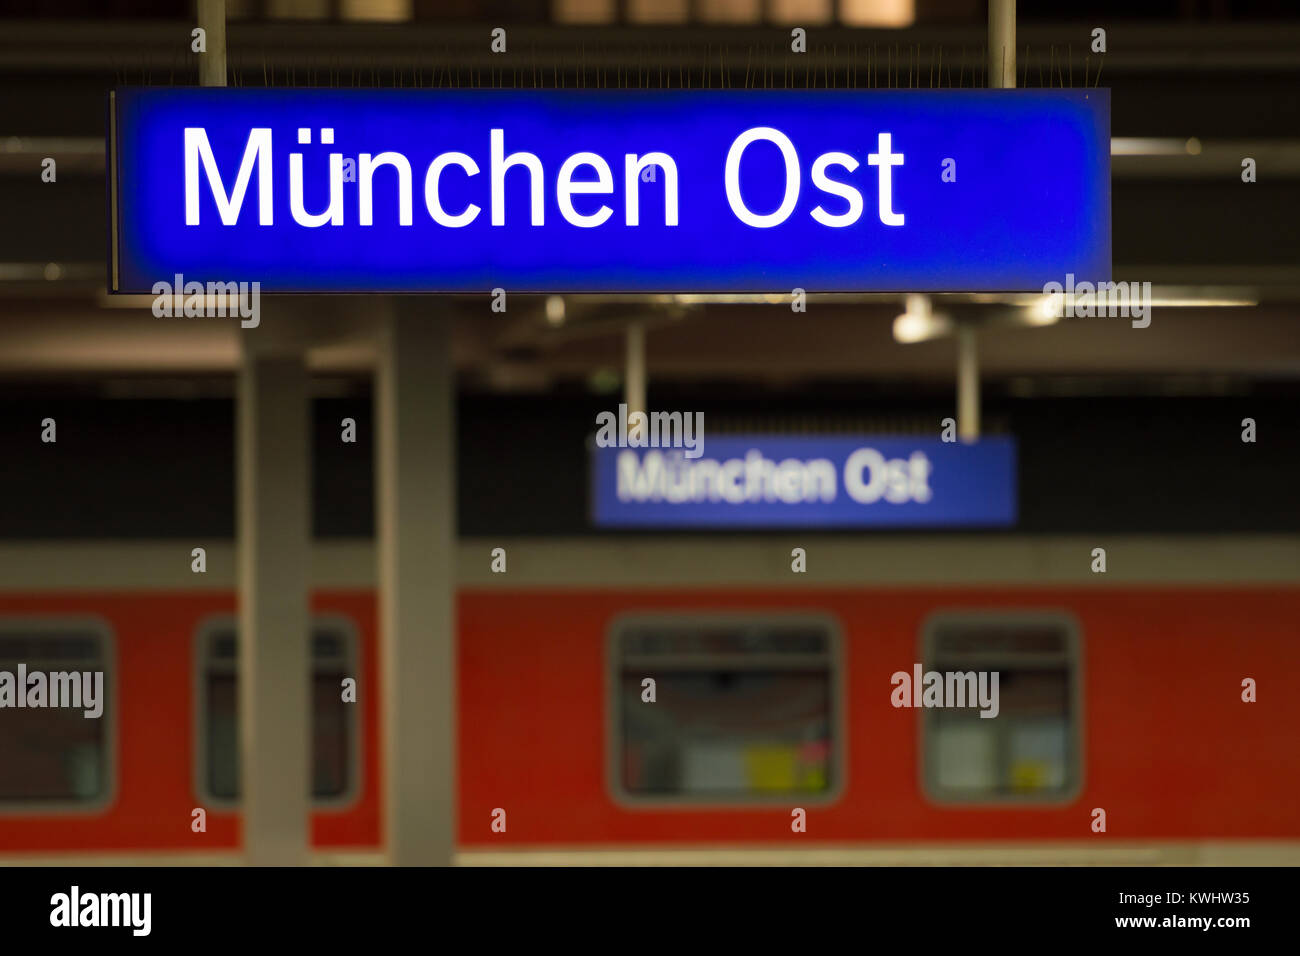 Munich, Germany - December 27, 2017: Luminous sign on Munich eastern railway station (Ostbahnhof or München Ost) Stock Photo